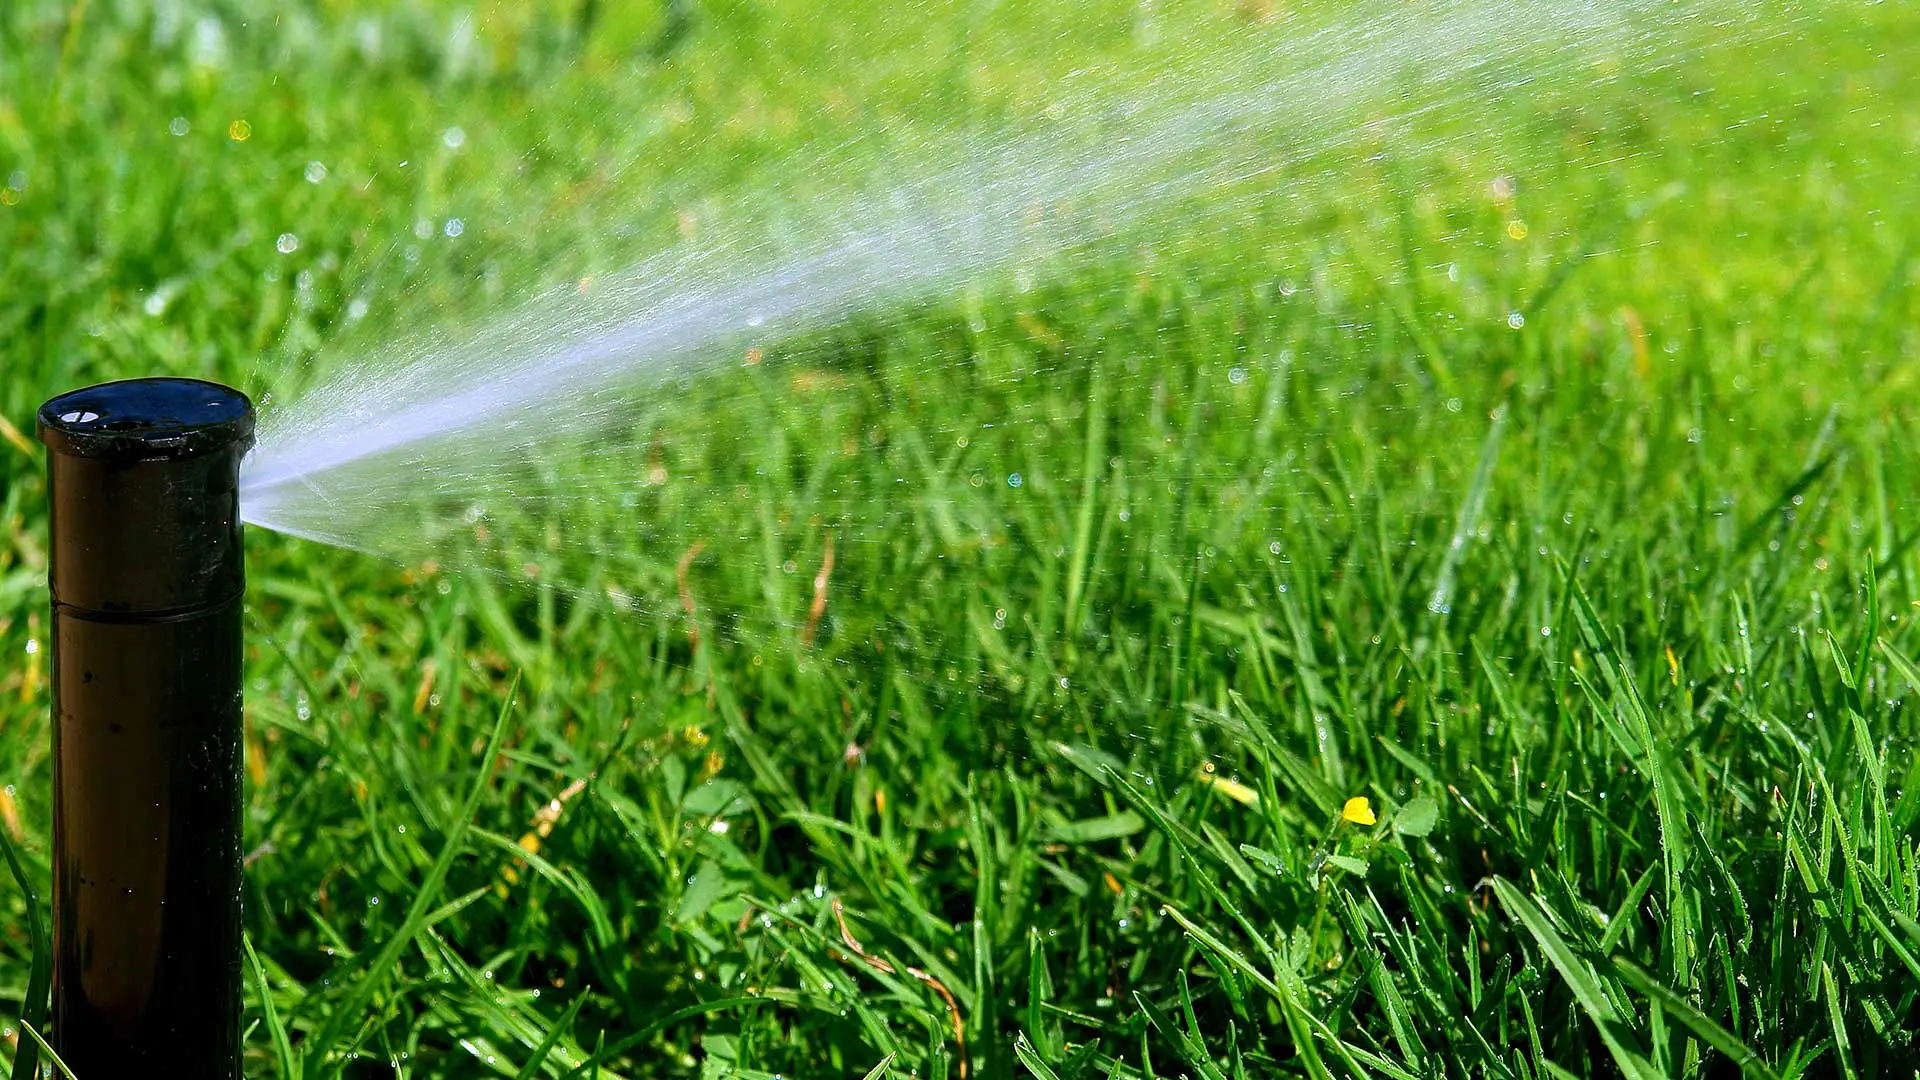 Irrigation sprinkler in lawn in Garland, TX.